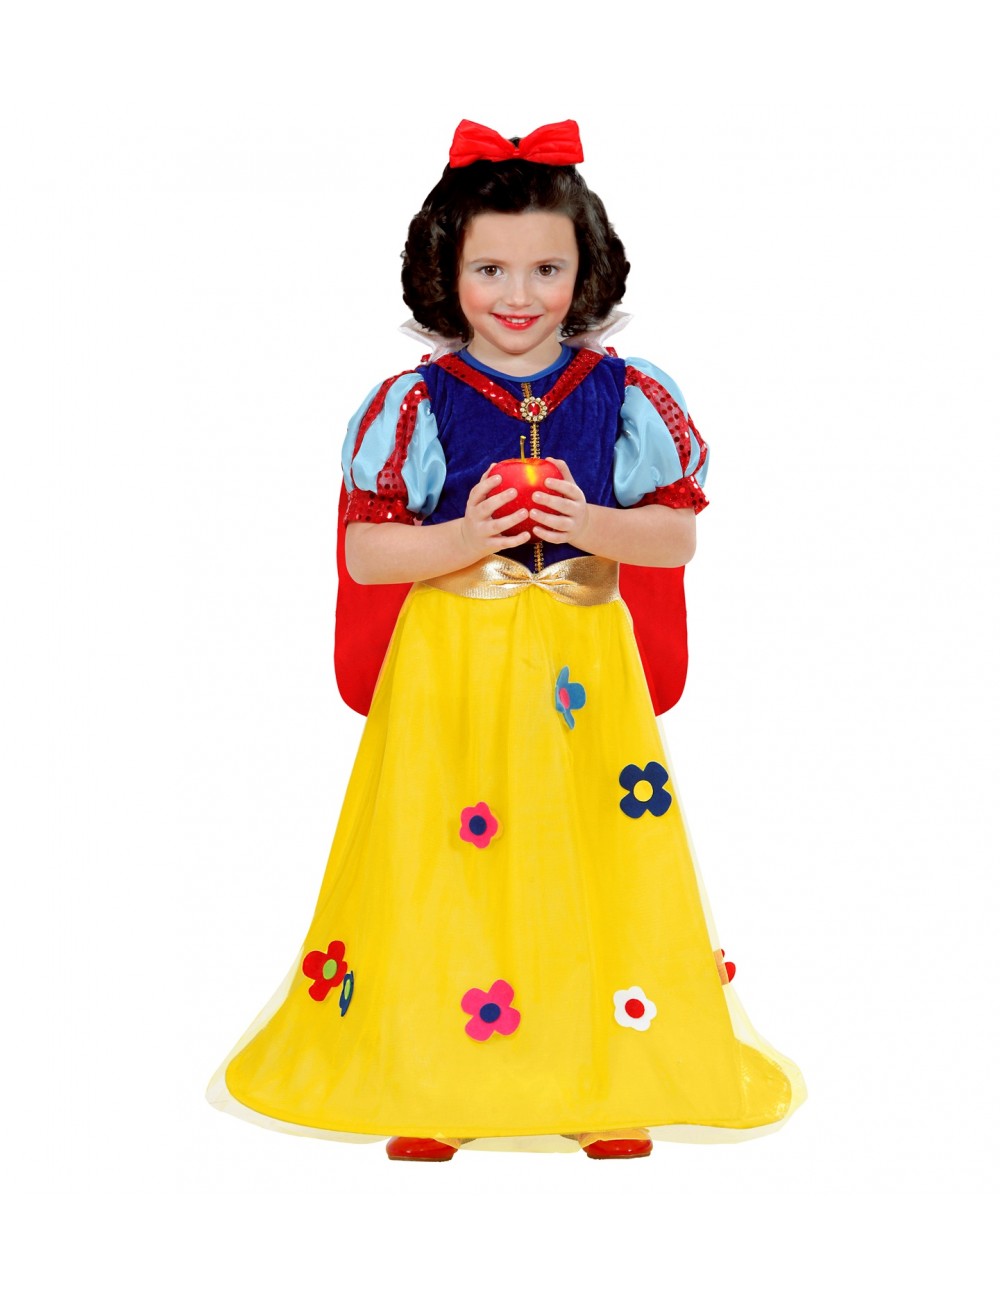 Costume disco star girl yellow, Déguisement enfant carnaval anniversaire  fête halloween